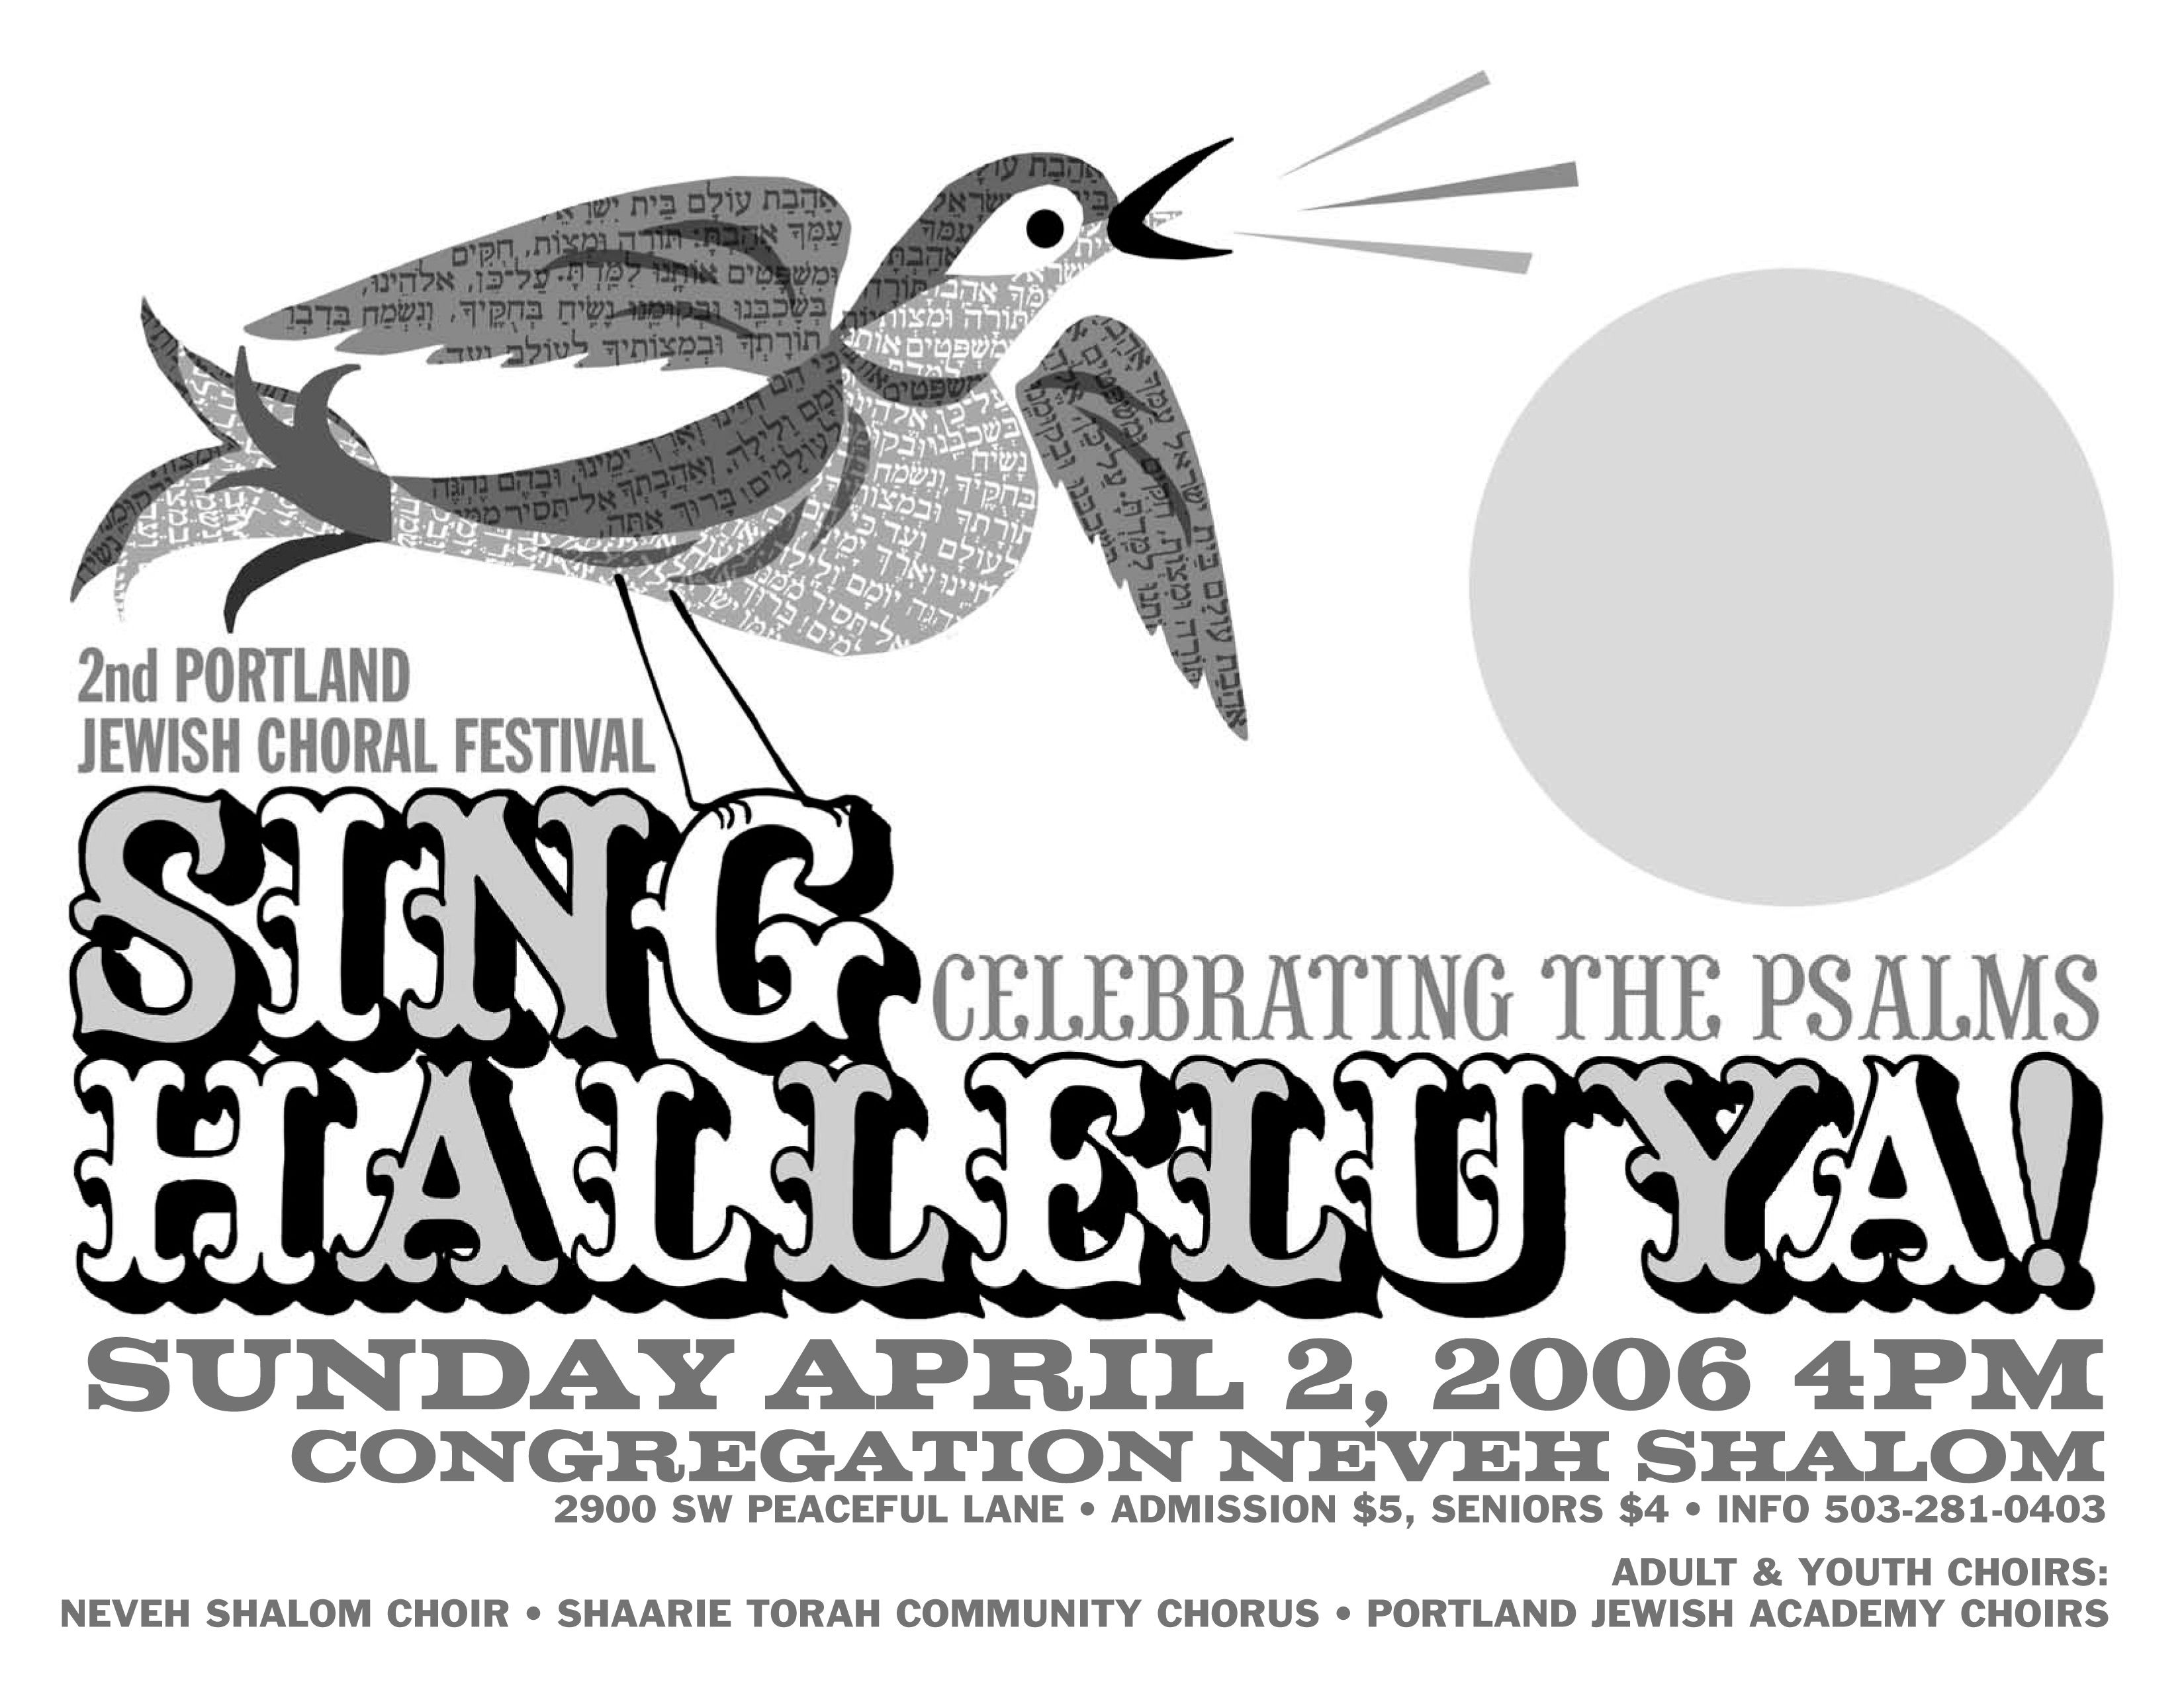 MXP-64.1 Sing Halleluyah 2005 Congregation Neveh Shalom  Jul 16 Concert Poster